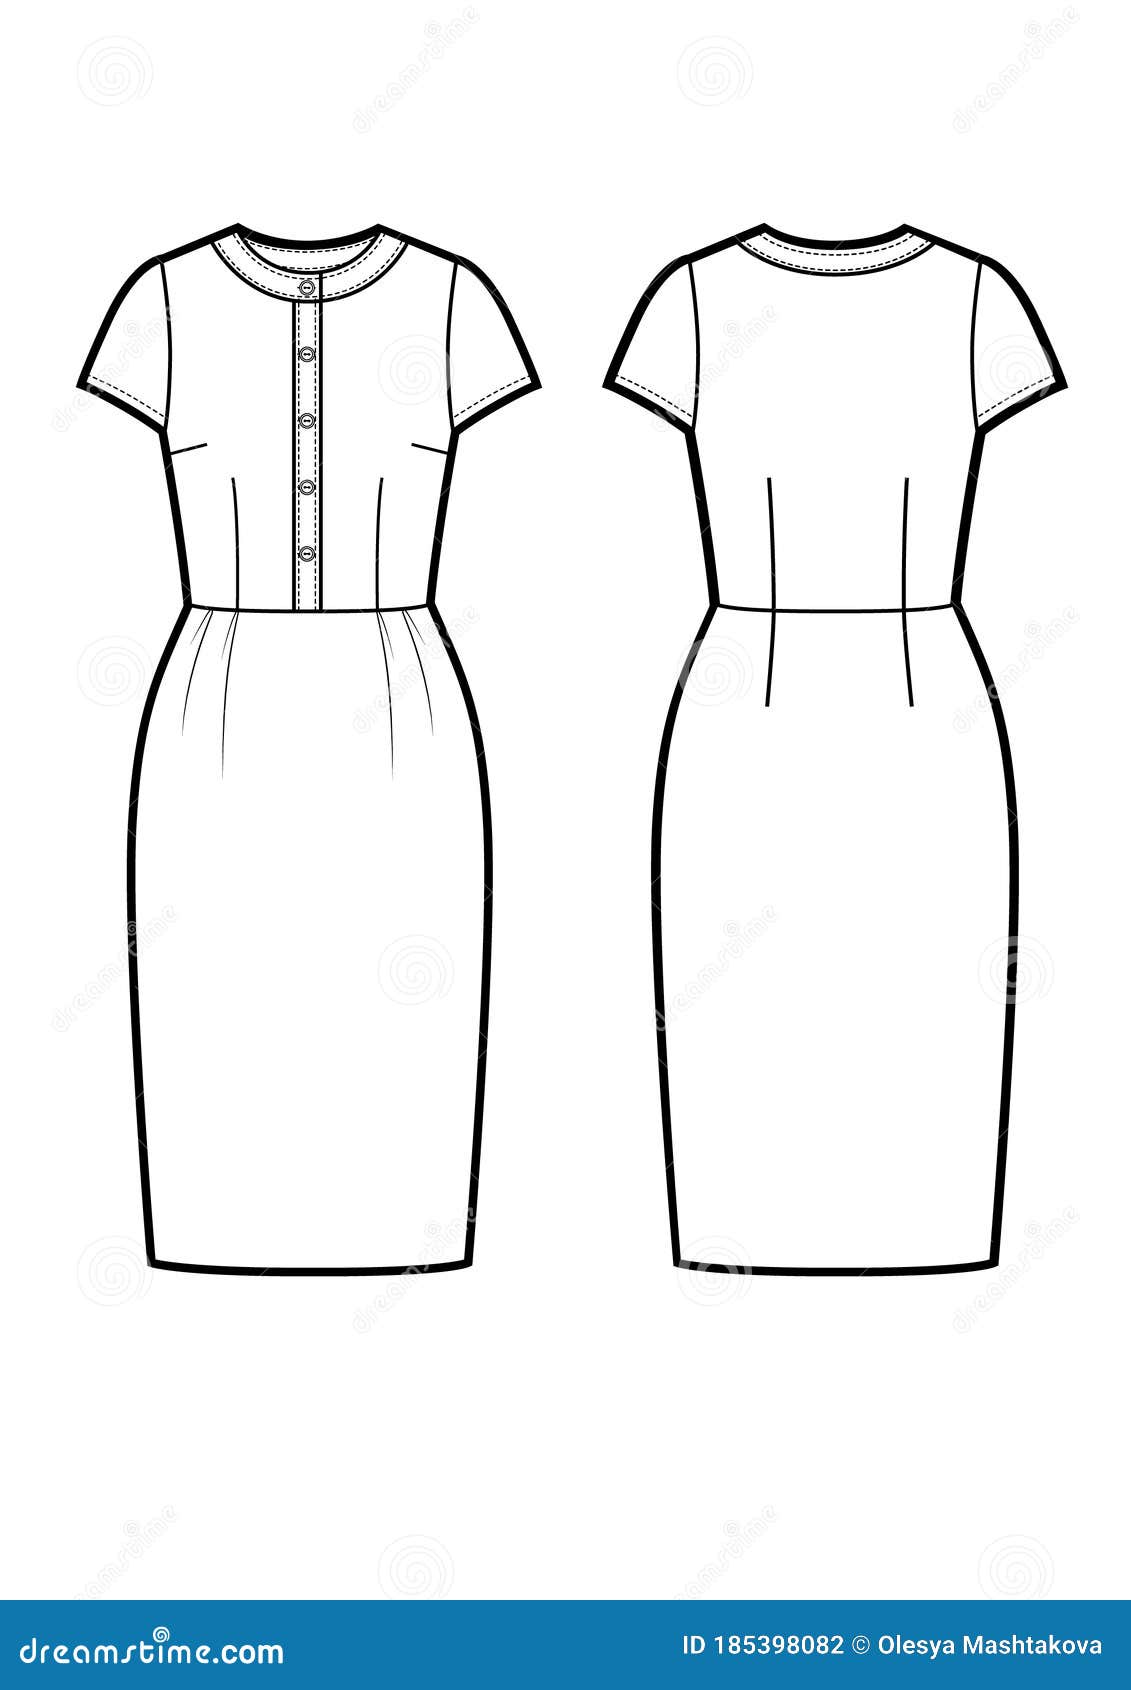 Sewing patterns  BurdaStylecom  Sheath dresses pattern Maxi dress  tutorials Sheath dress